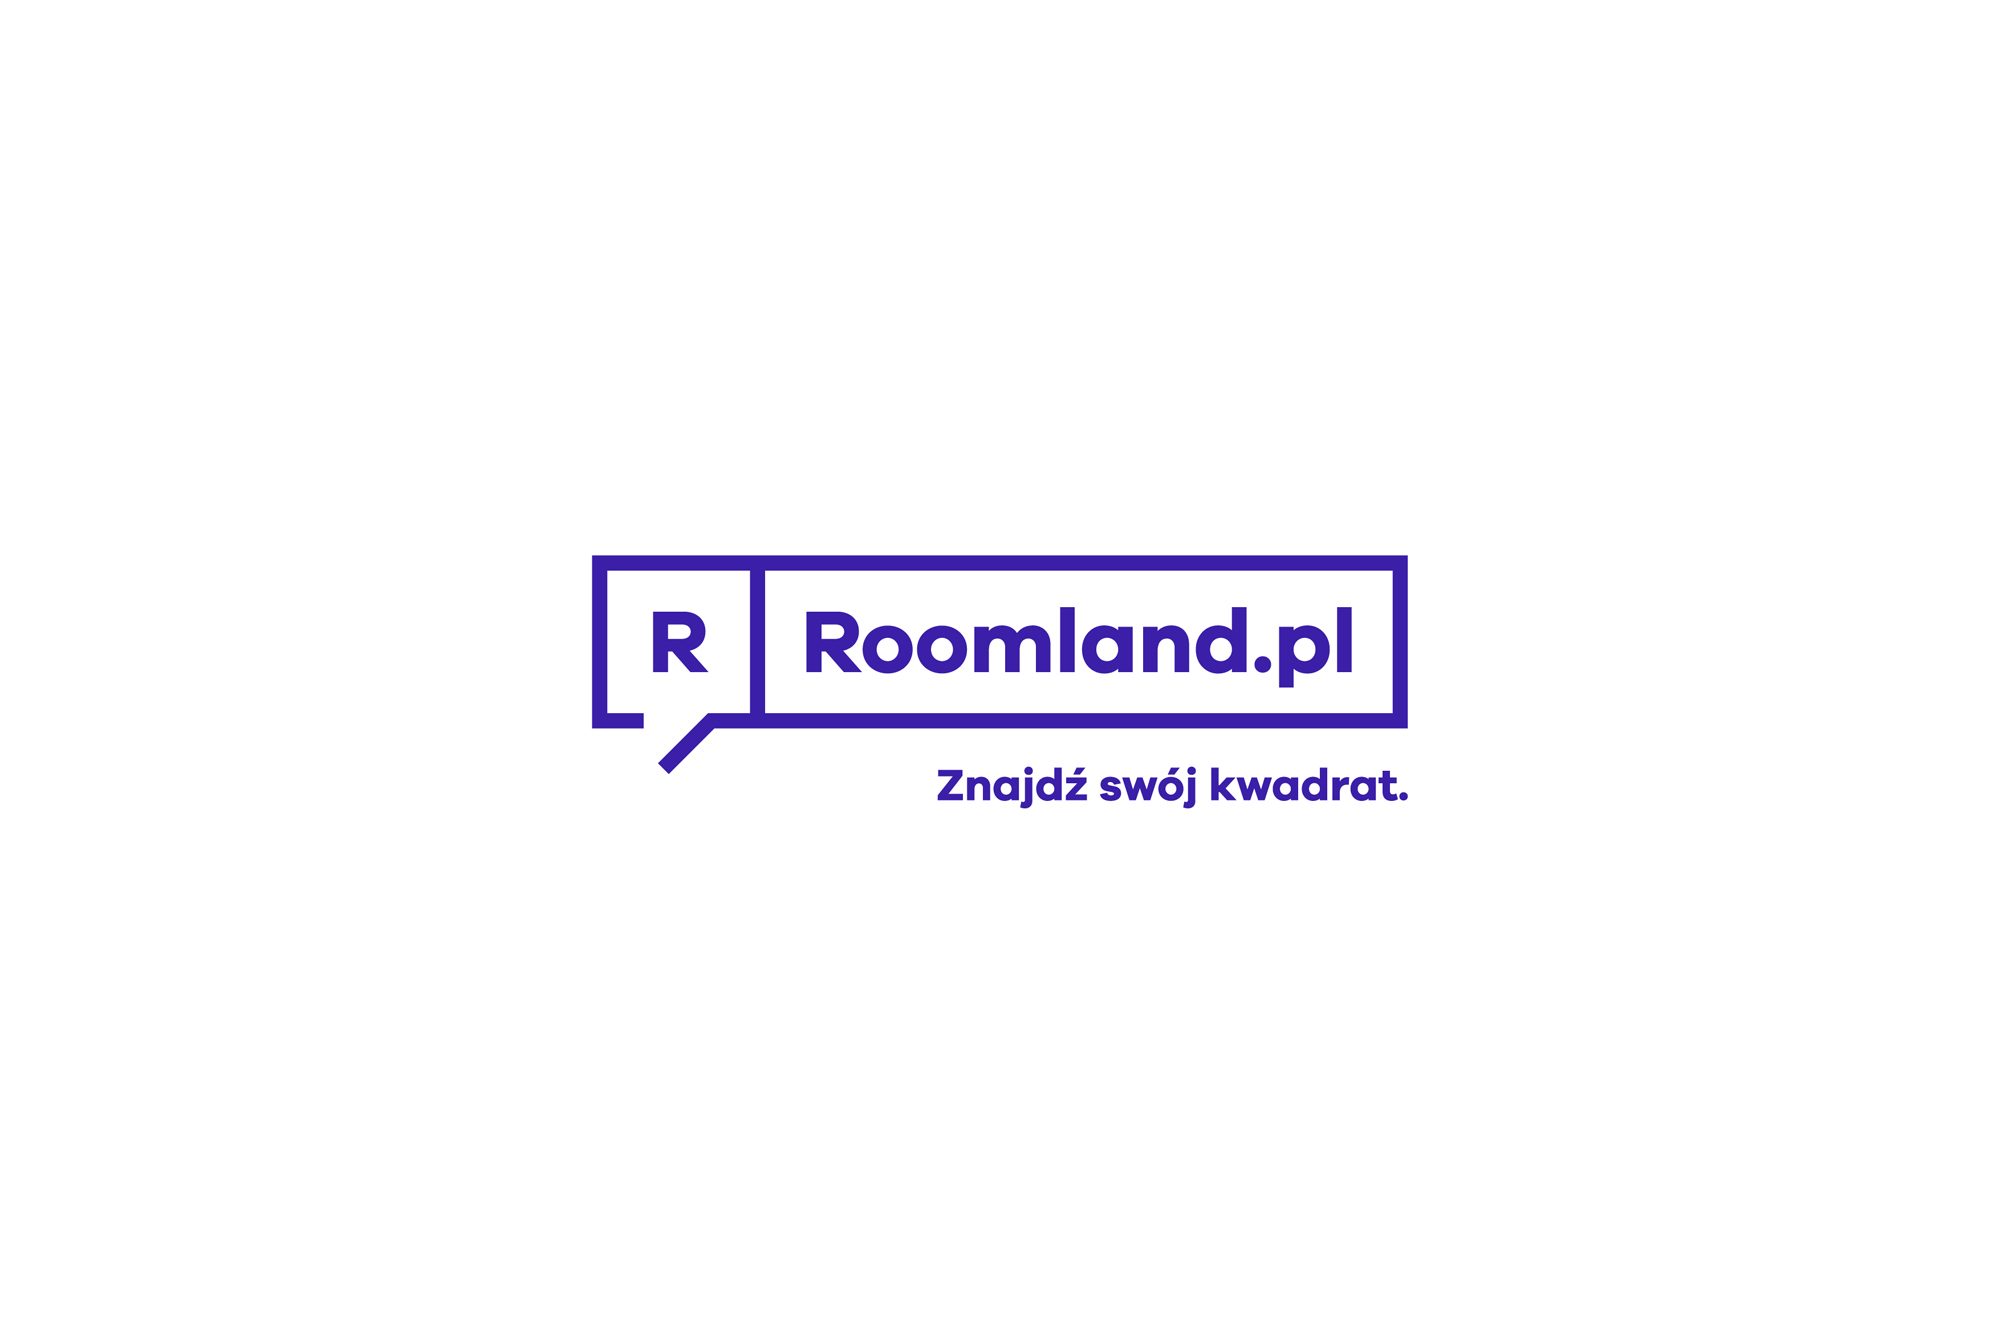 Roomland.pl - logo + slogan wersjs2